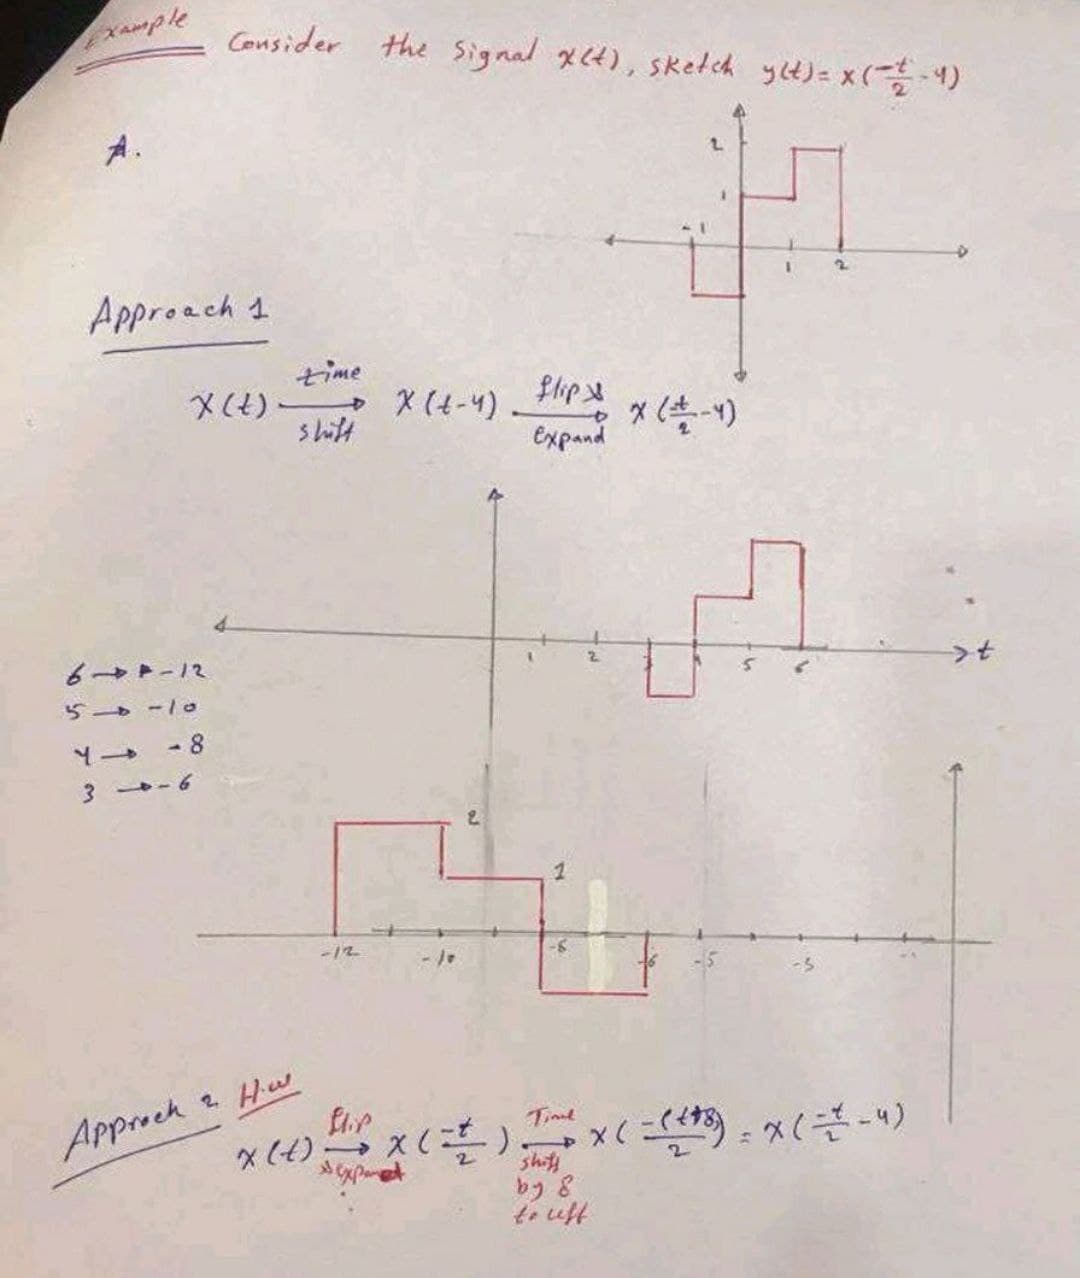 Xmple
Consider the Signal x4), sketch ylt)= x(-4)
A.
Approach 1
time
X(4)
X(4-4).
flip
x (4)
Expand
shitt
6 -12
5 -1o
- 8
2.
1
-12
Approck e Hu
x (4);
Timd
2
by 8
to uff
